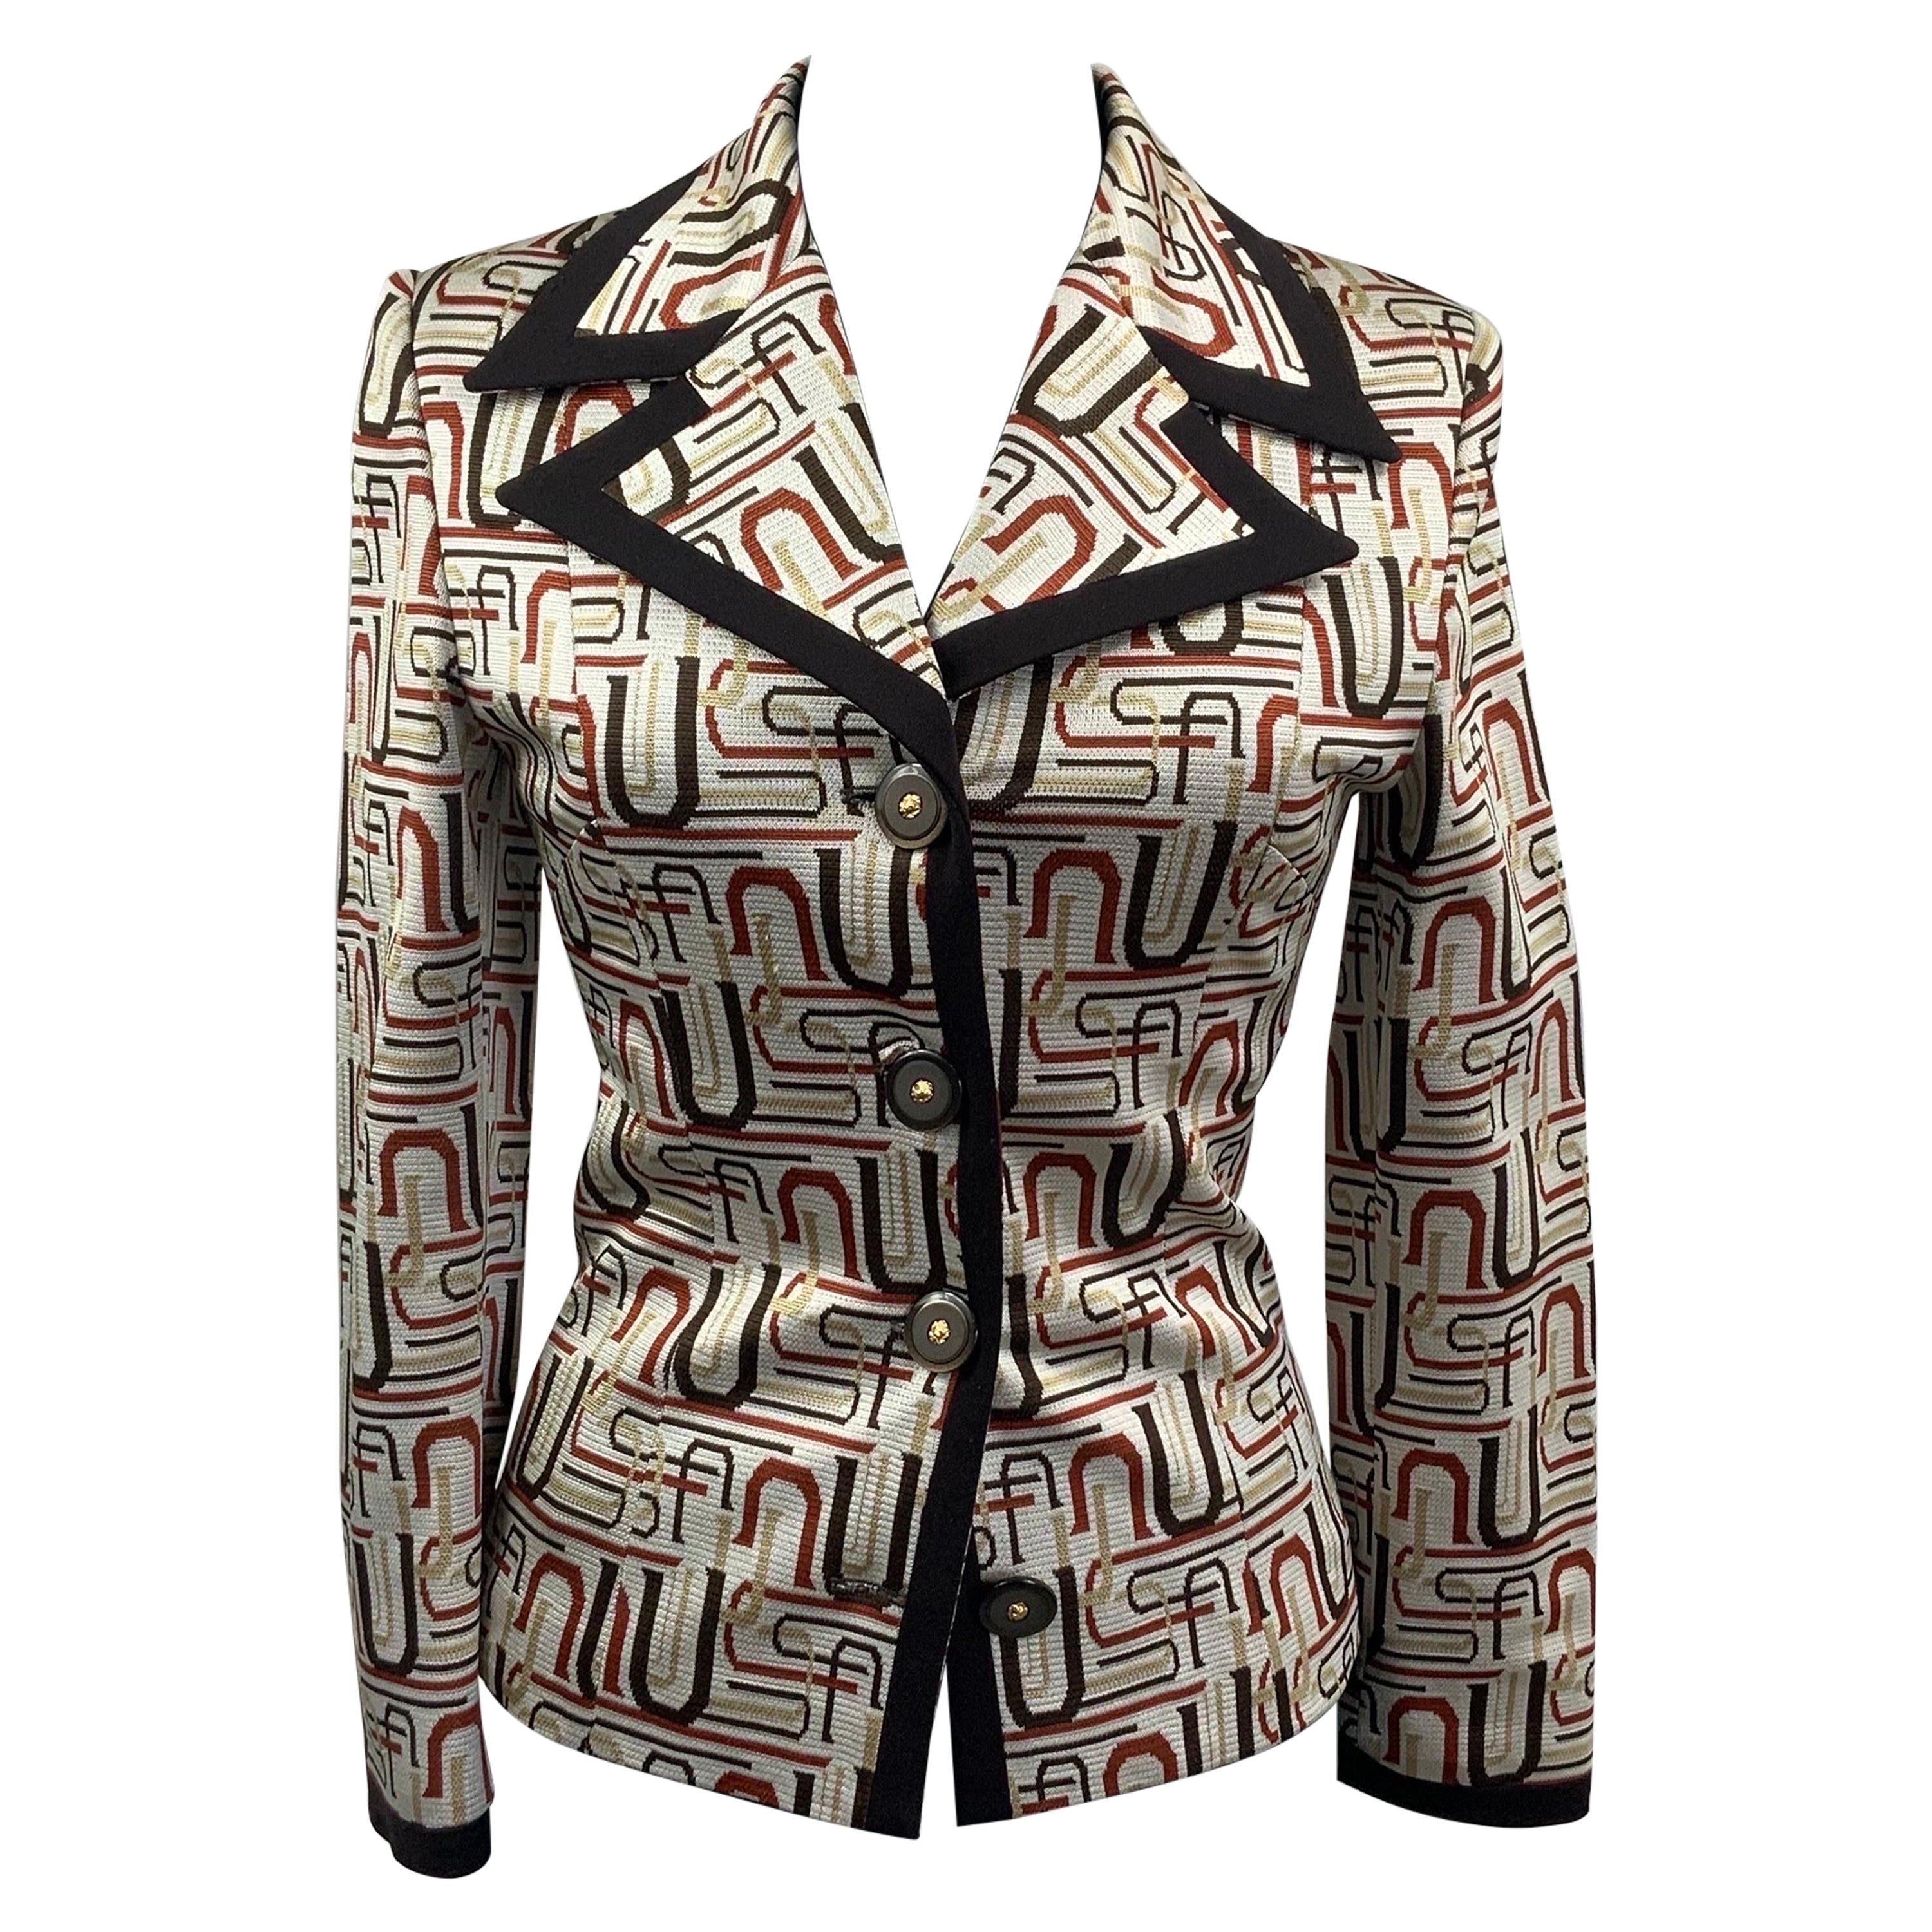 Versus Gianni Versace pattern jacket